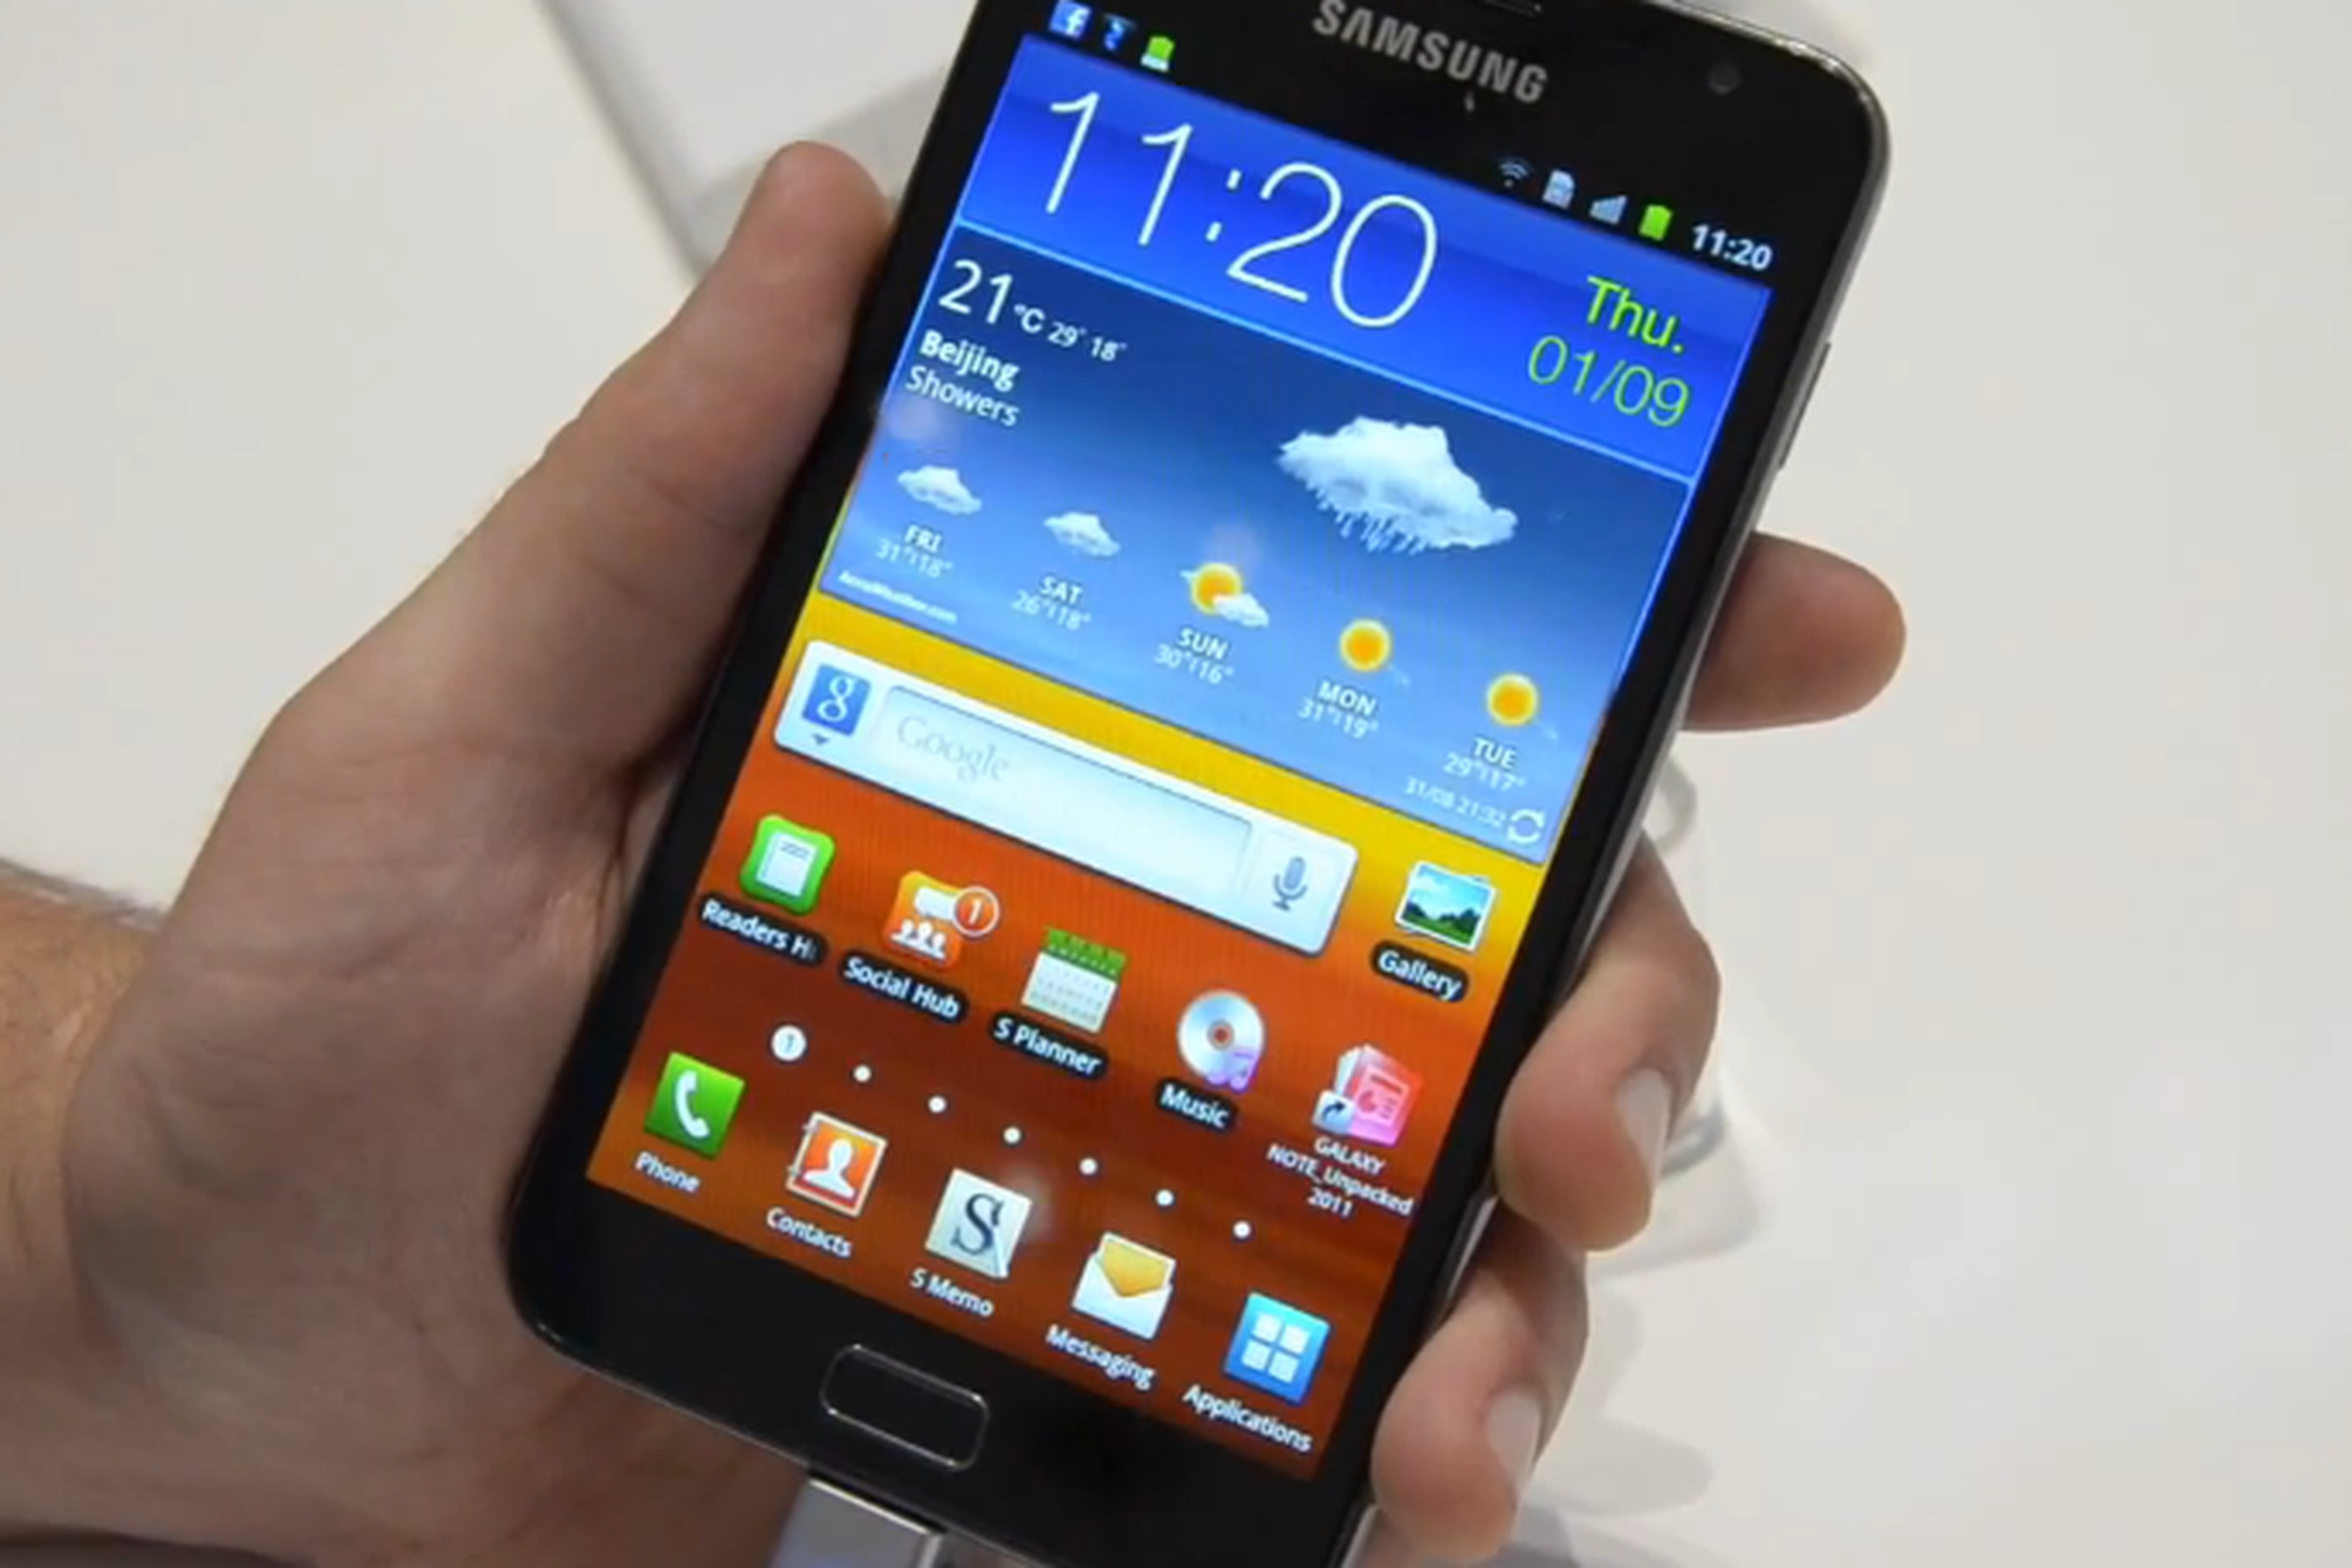 Samsung Galaxy Note hands-on